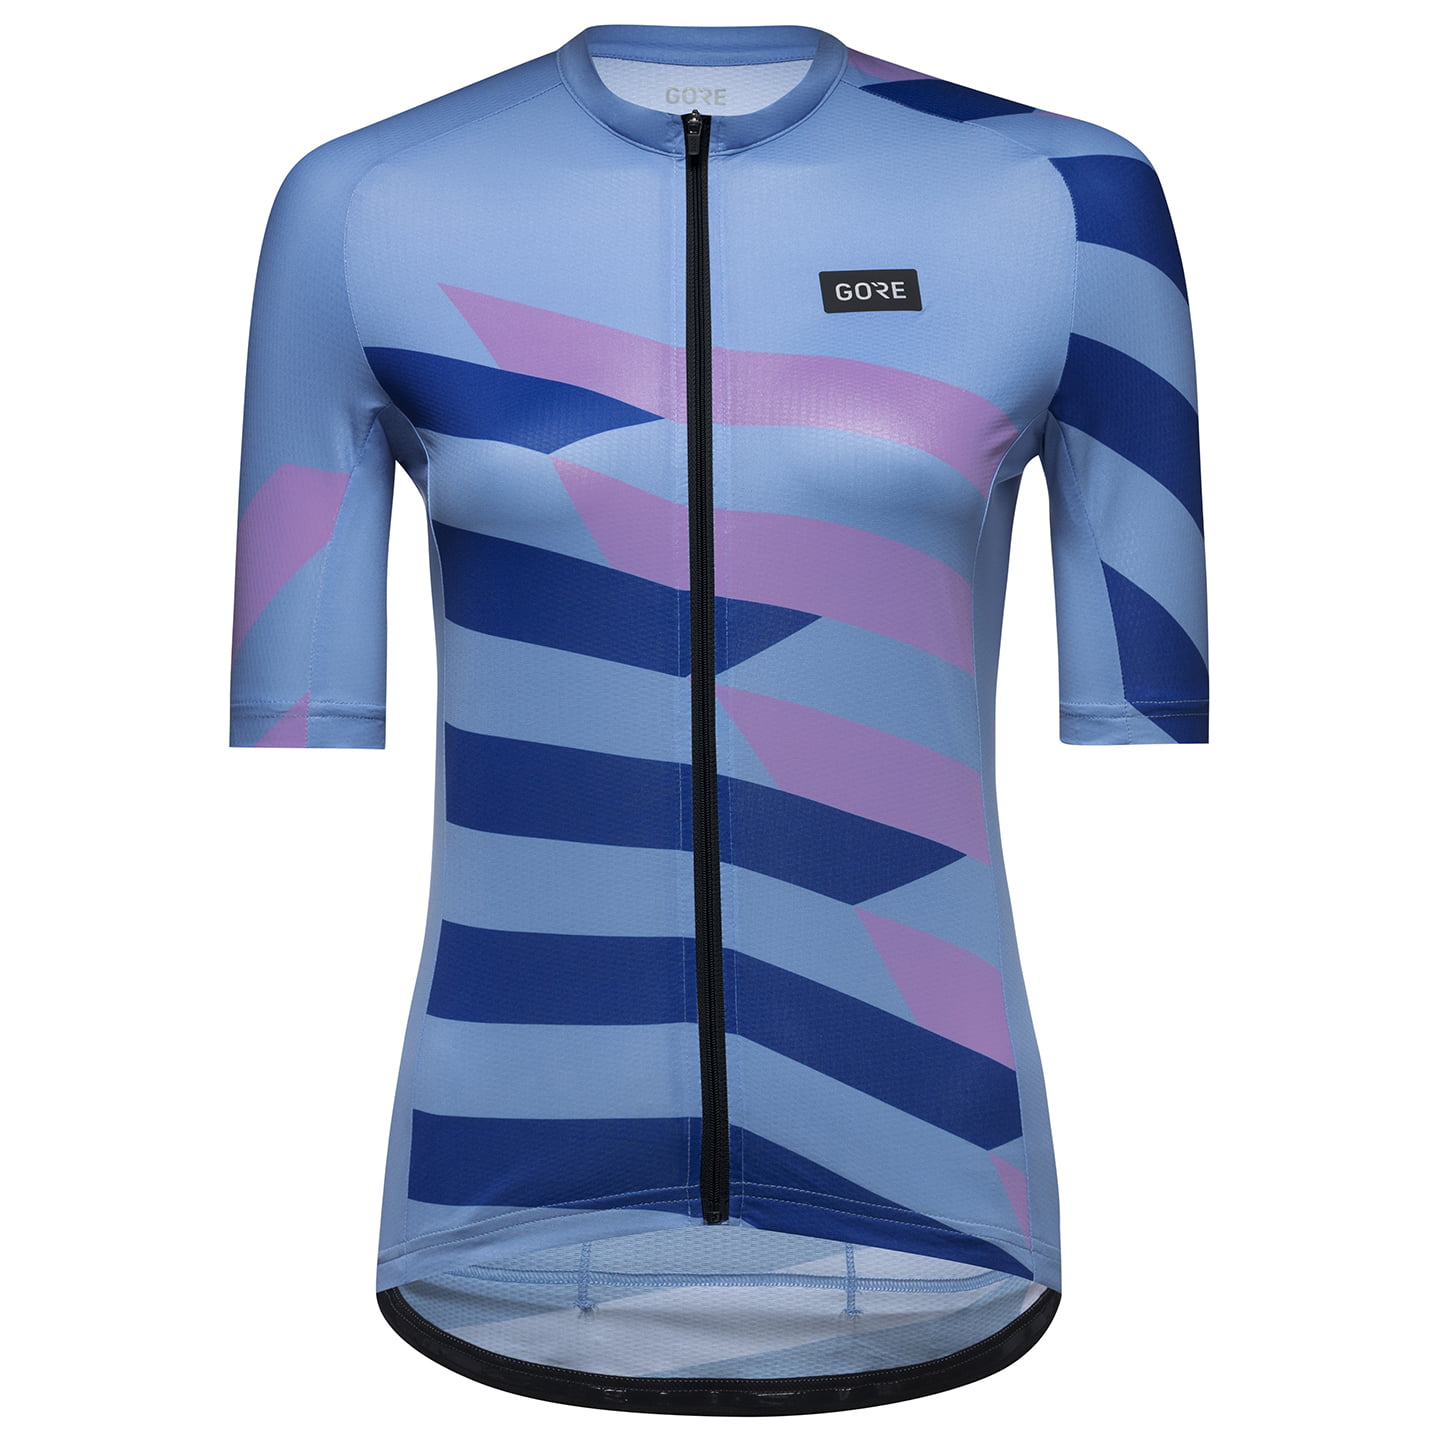 Spirit Signal Chaos Women’s Jersey Women’s Short Sleeve Jersey, size 40, Cycle shirt, Bike clothing